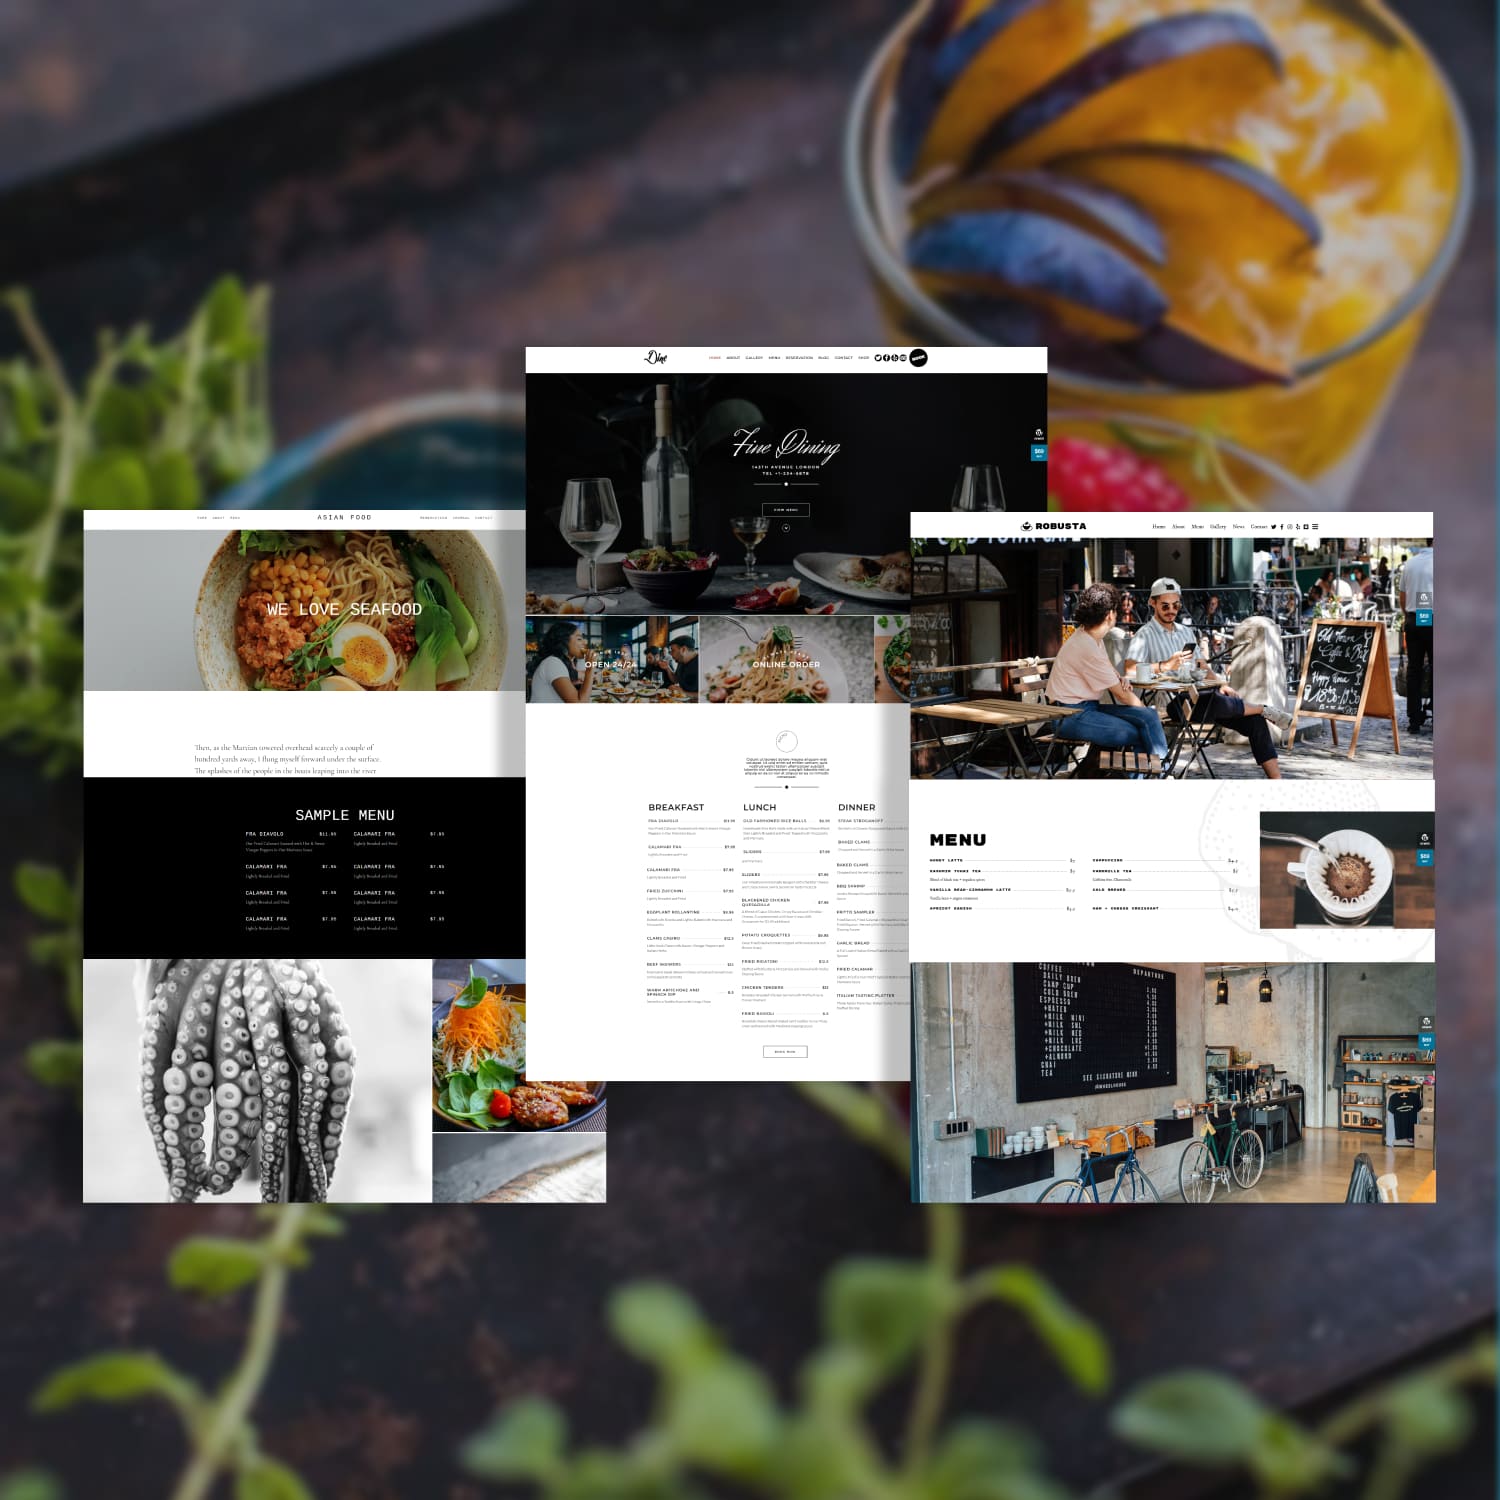 Dine - Restaurant, Food, Bakery, Cafe WordPress Theme cover.